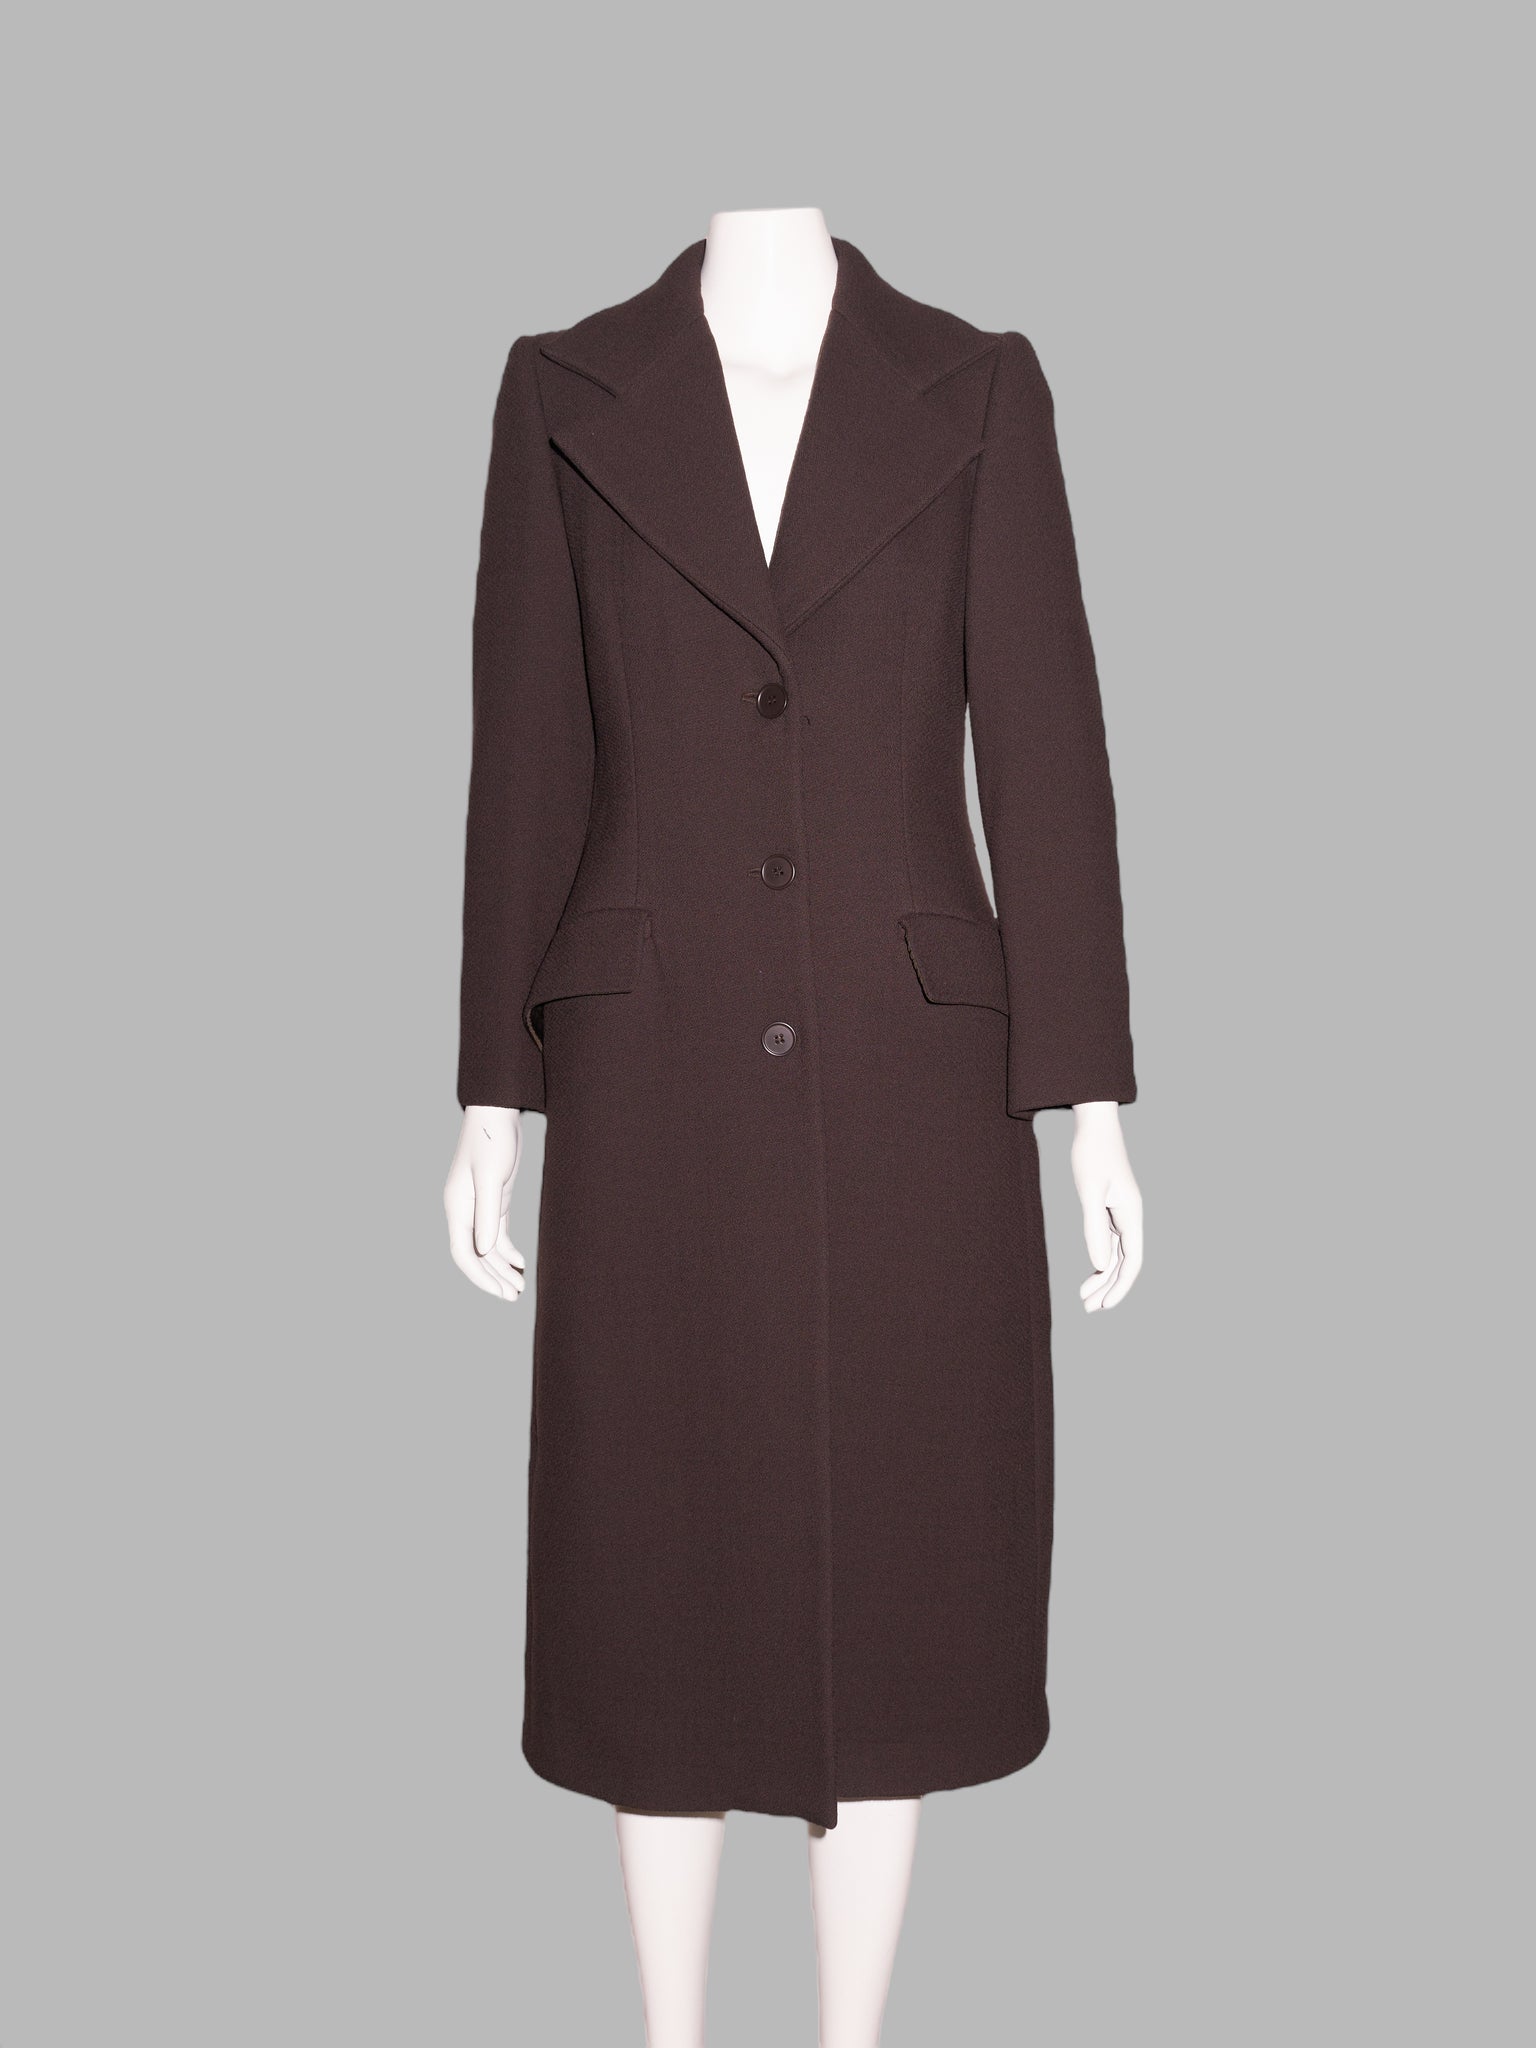 Enrica Massei 1990s brown wool three button wide lapel coat - size 40